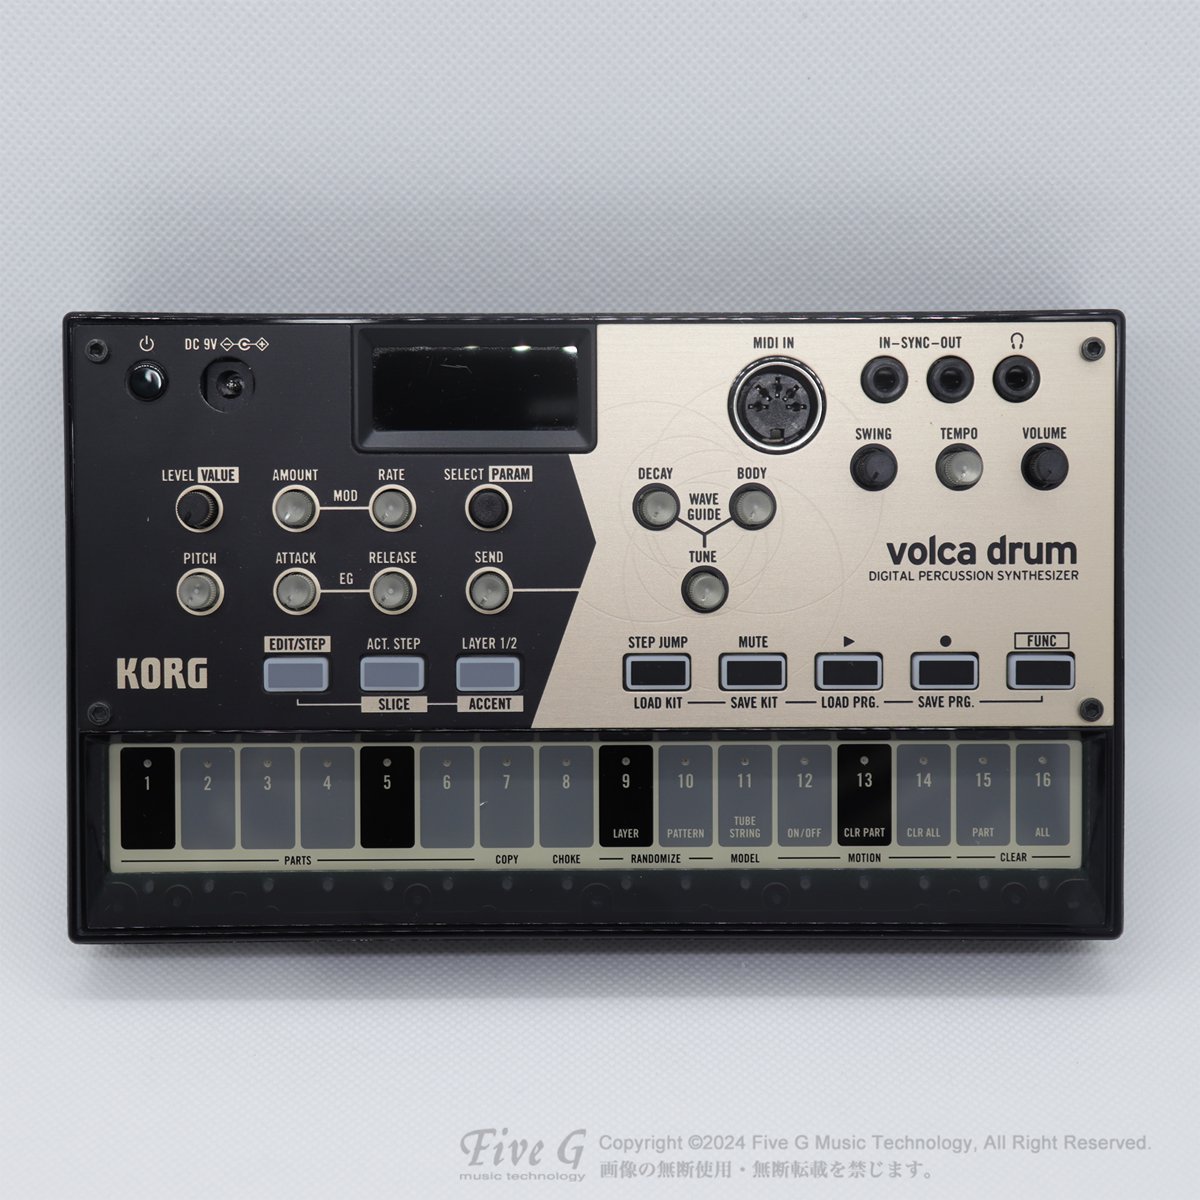 KORG | volca drum | 中古 - Used - 音源モジュール | Five G music technology